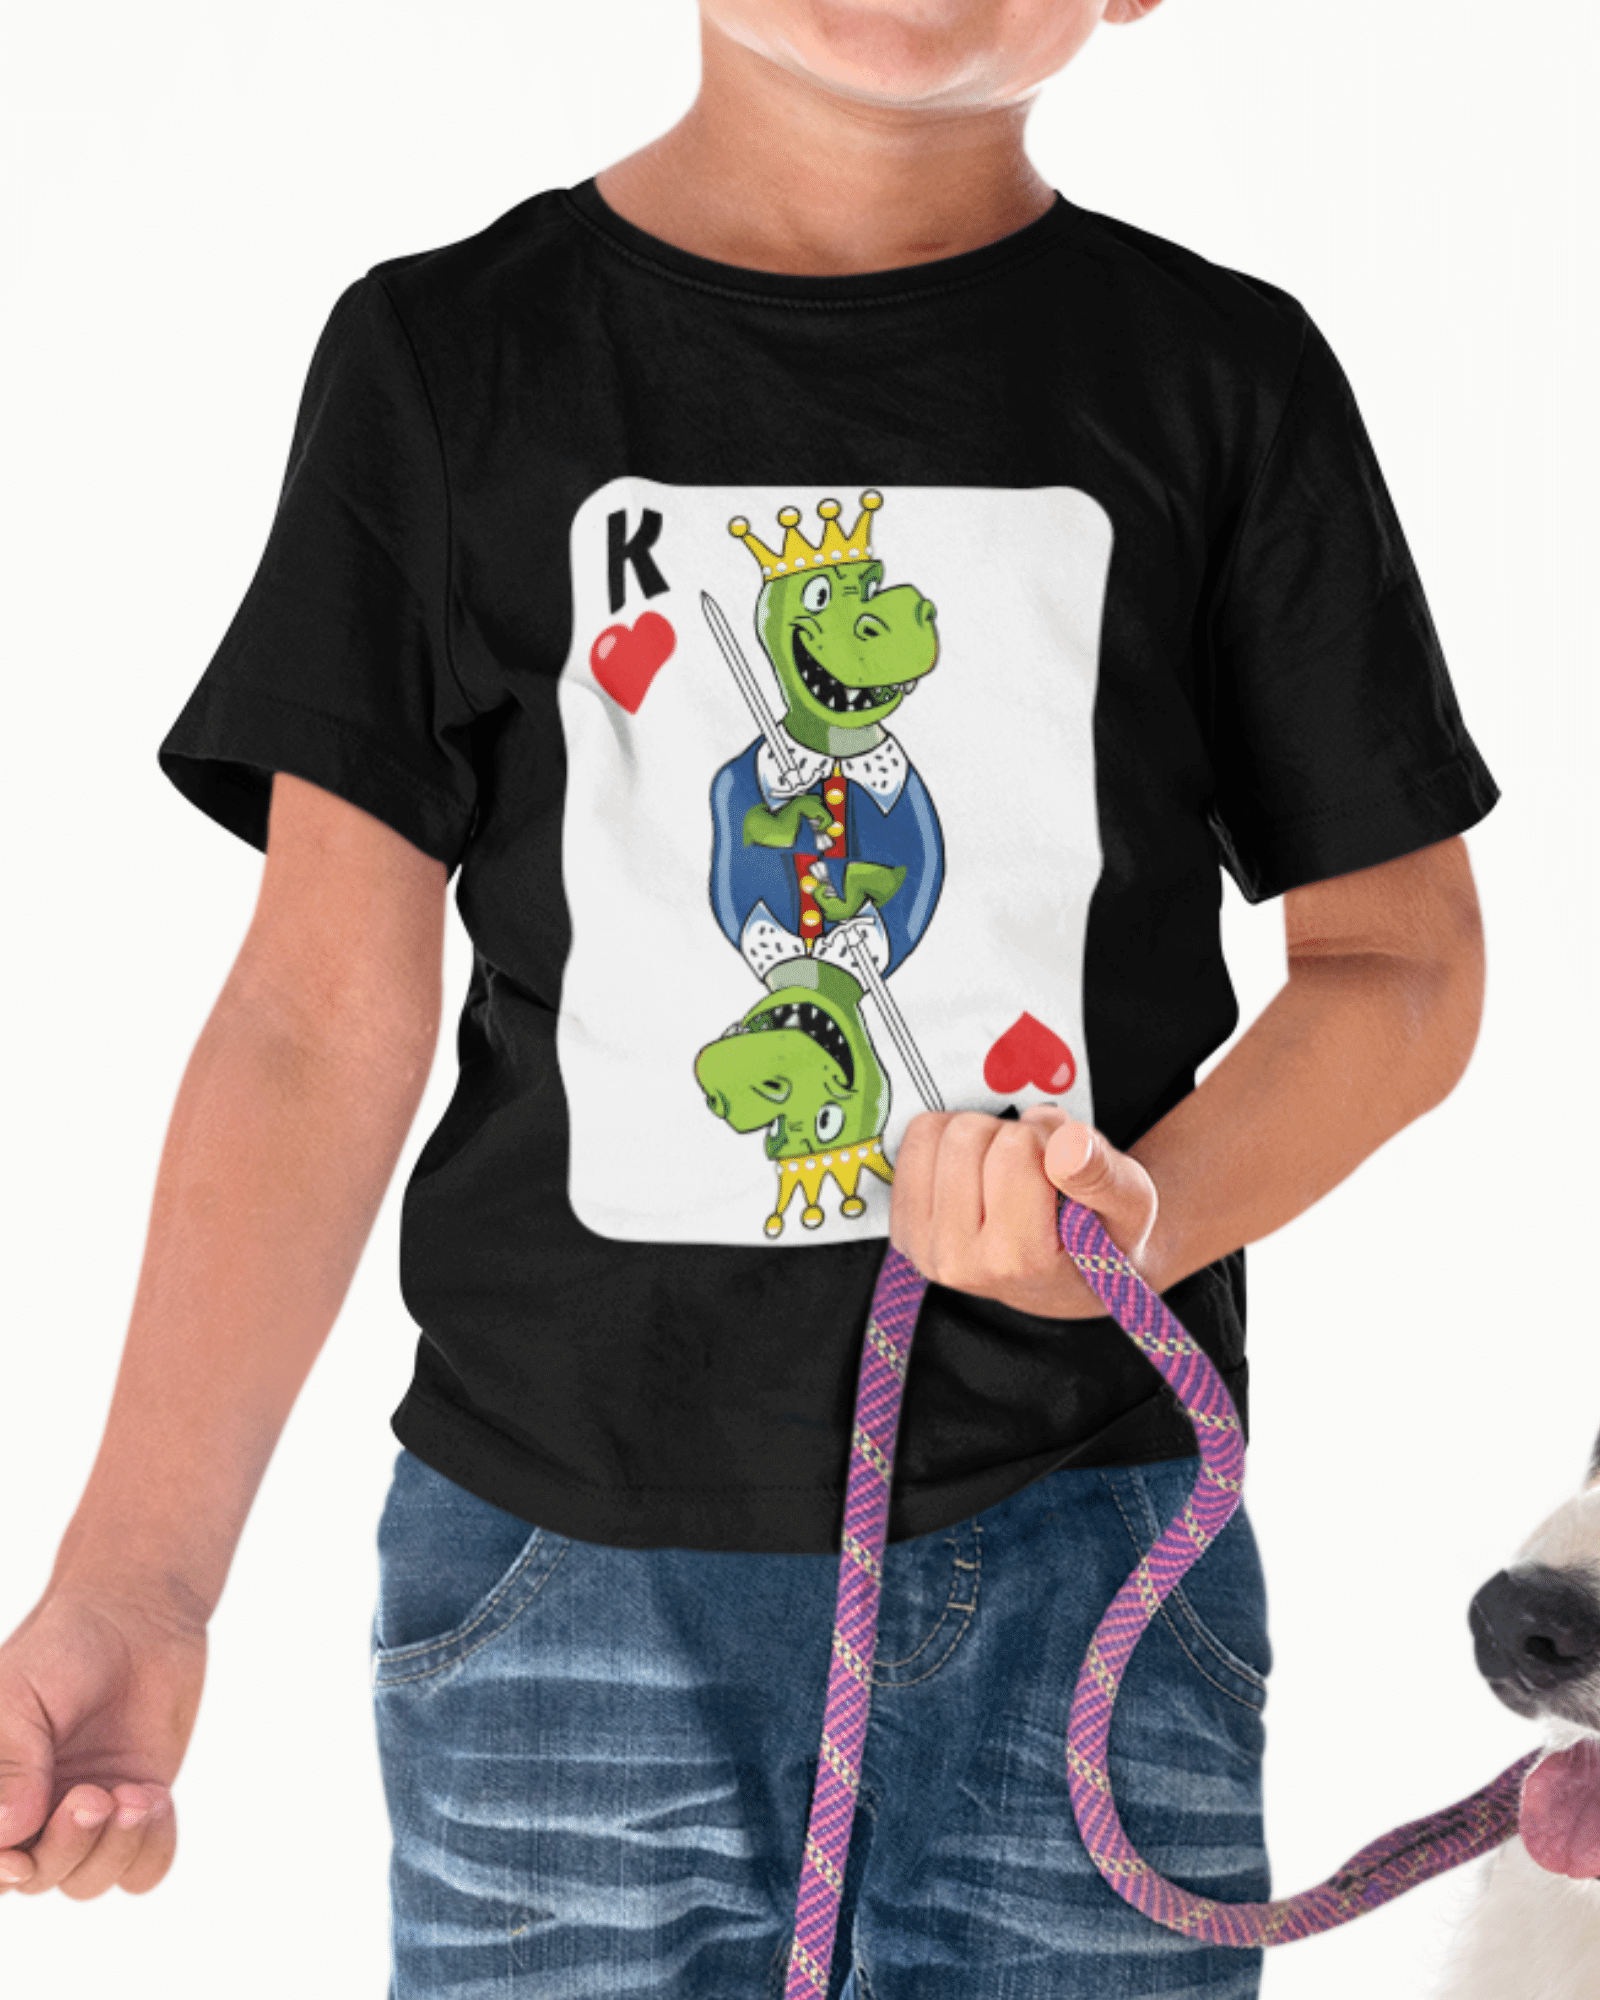 boy wearing a shirt with a dinosaur playing card motif